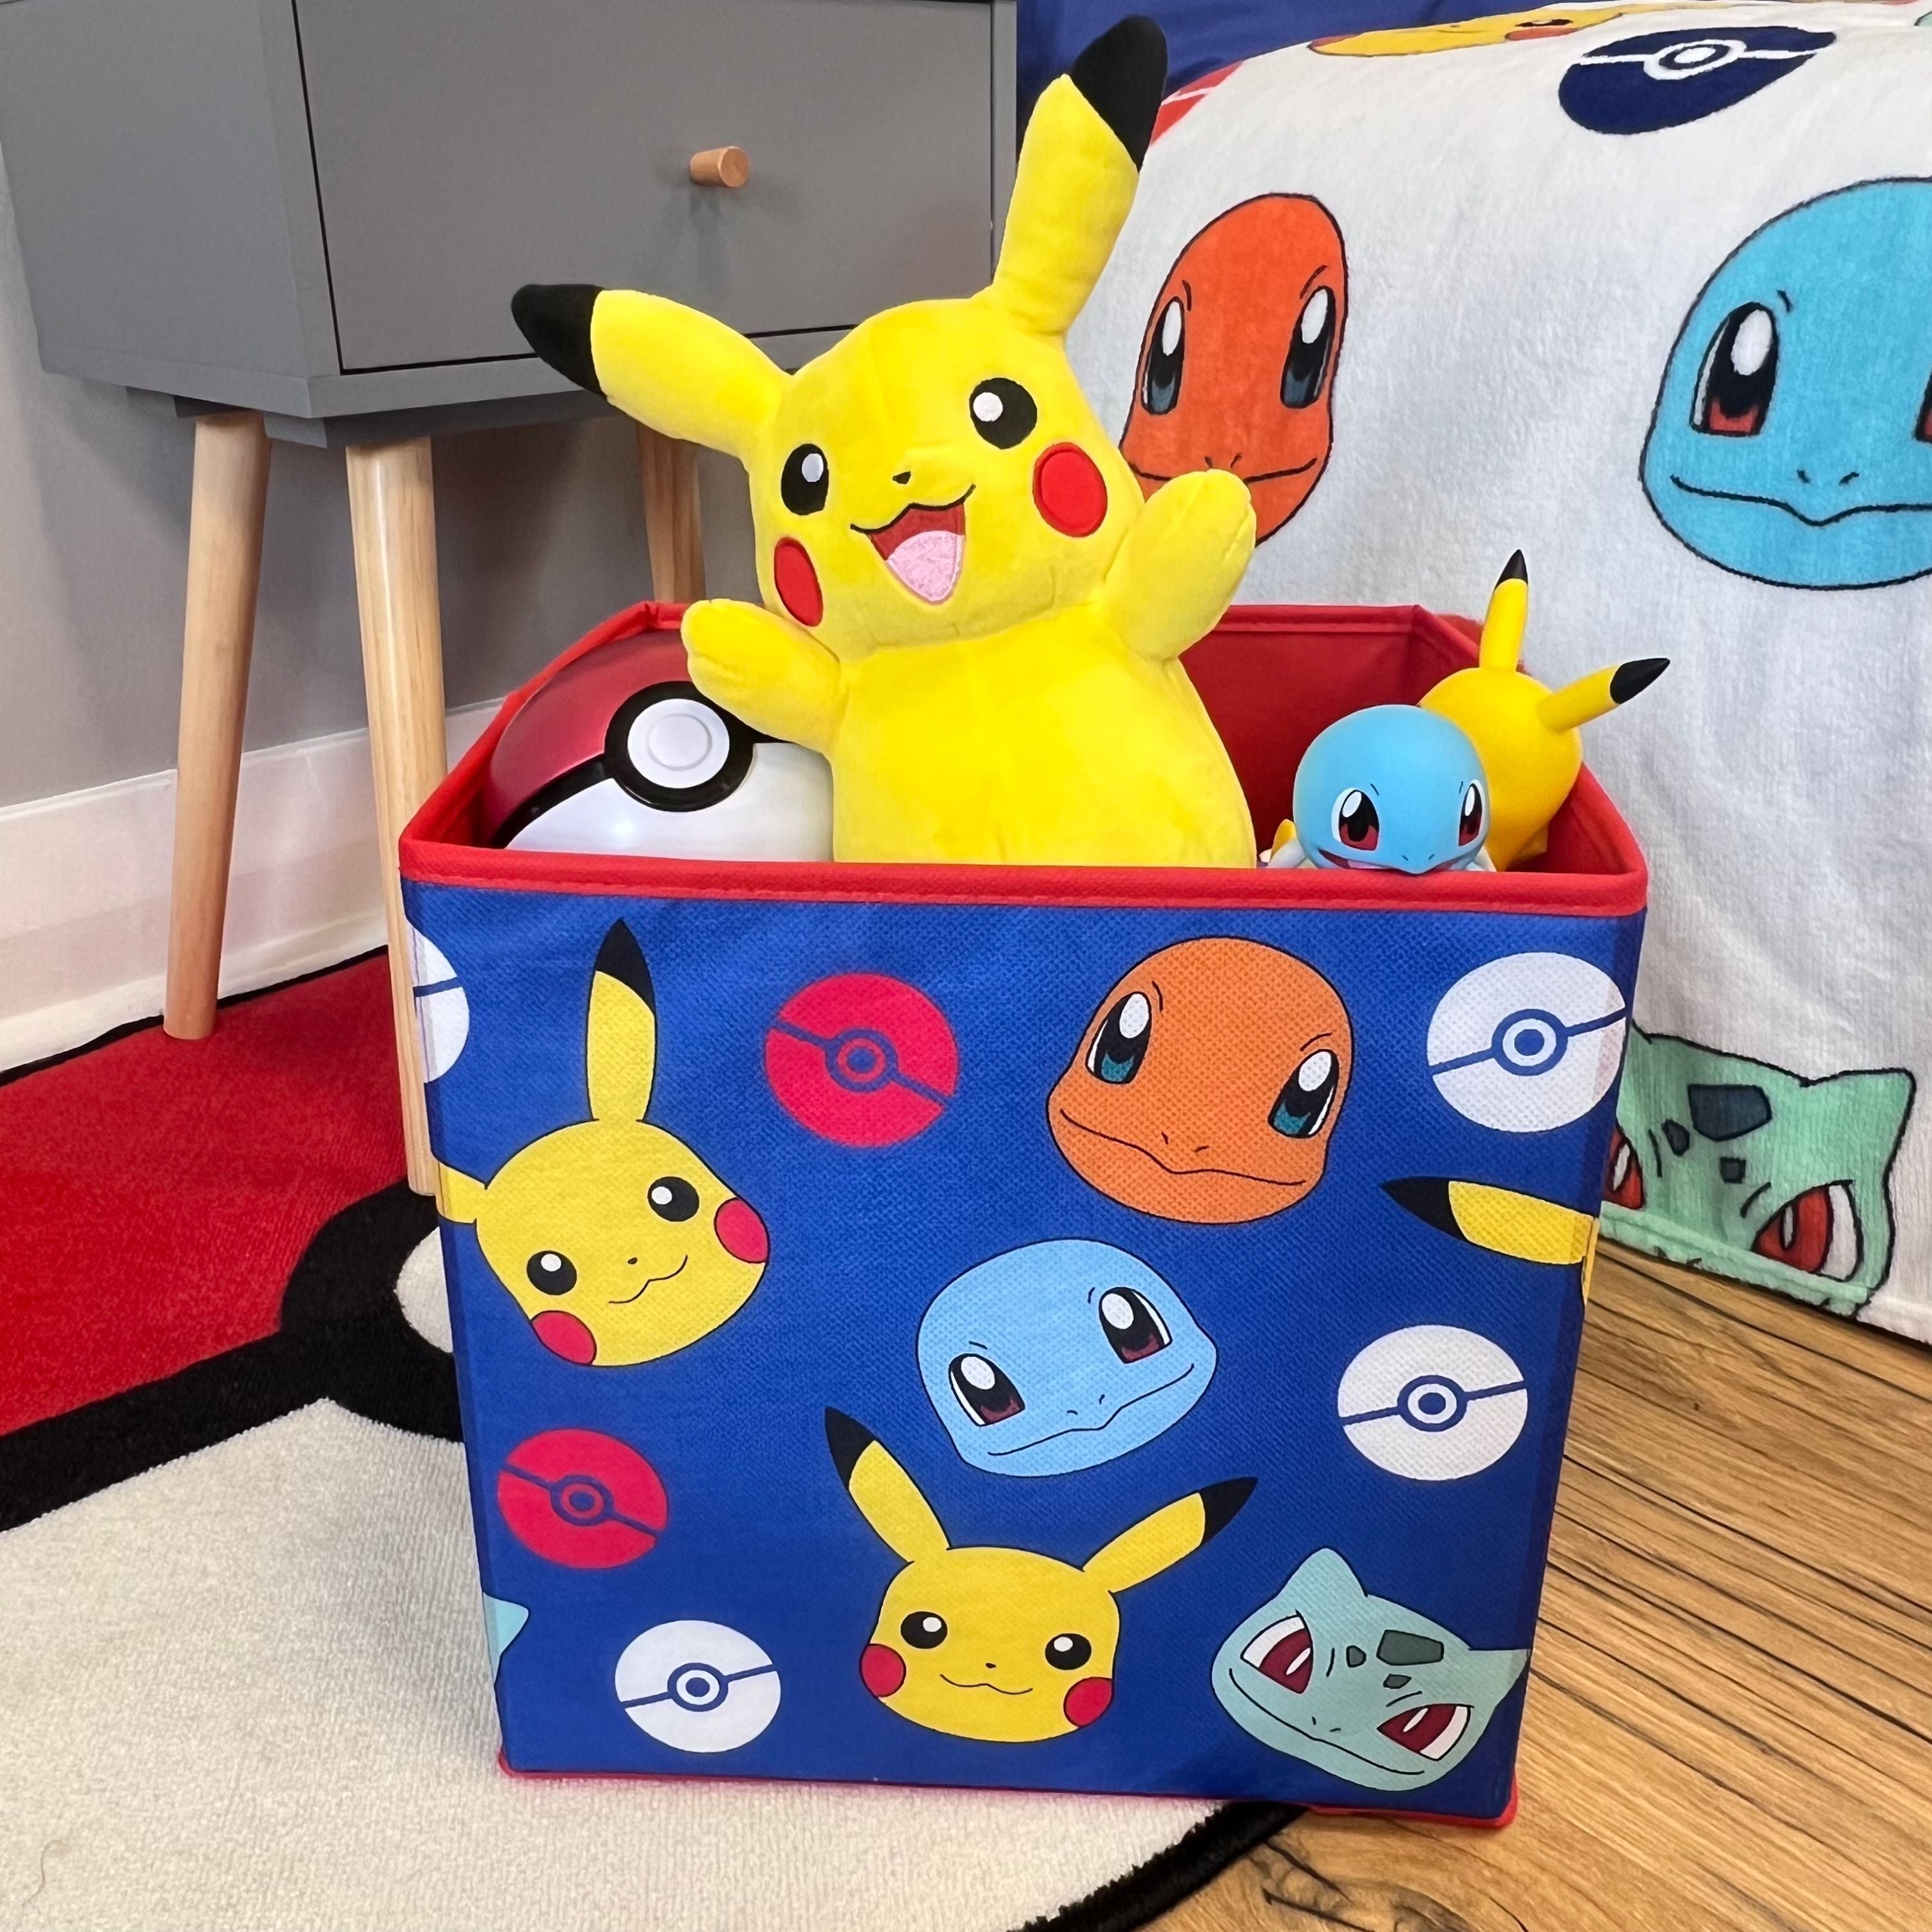 Set of 2 3.6L Pokemon Storage Cubes